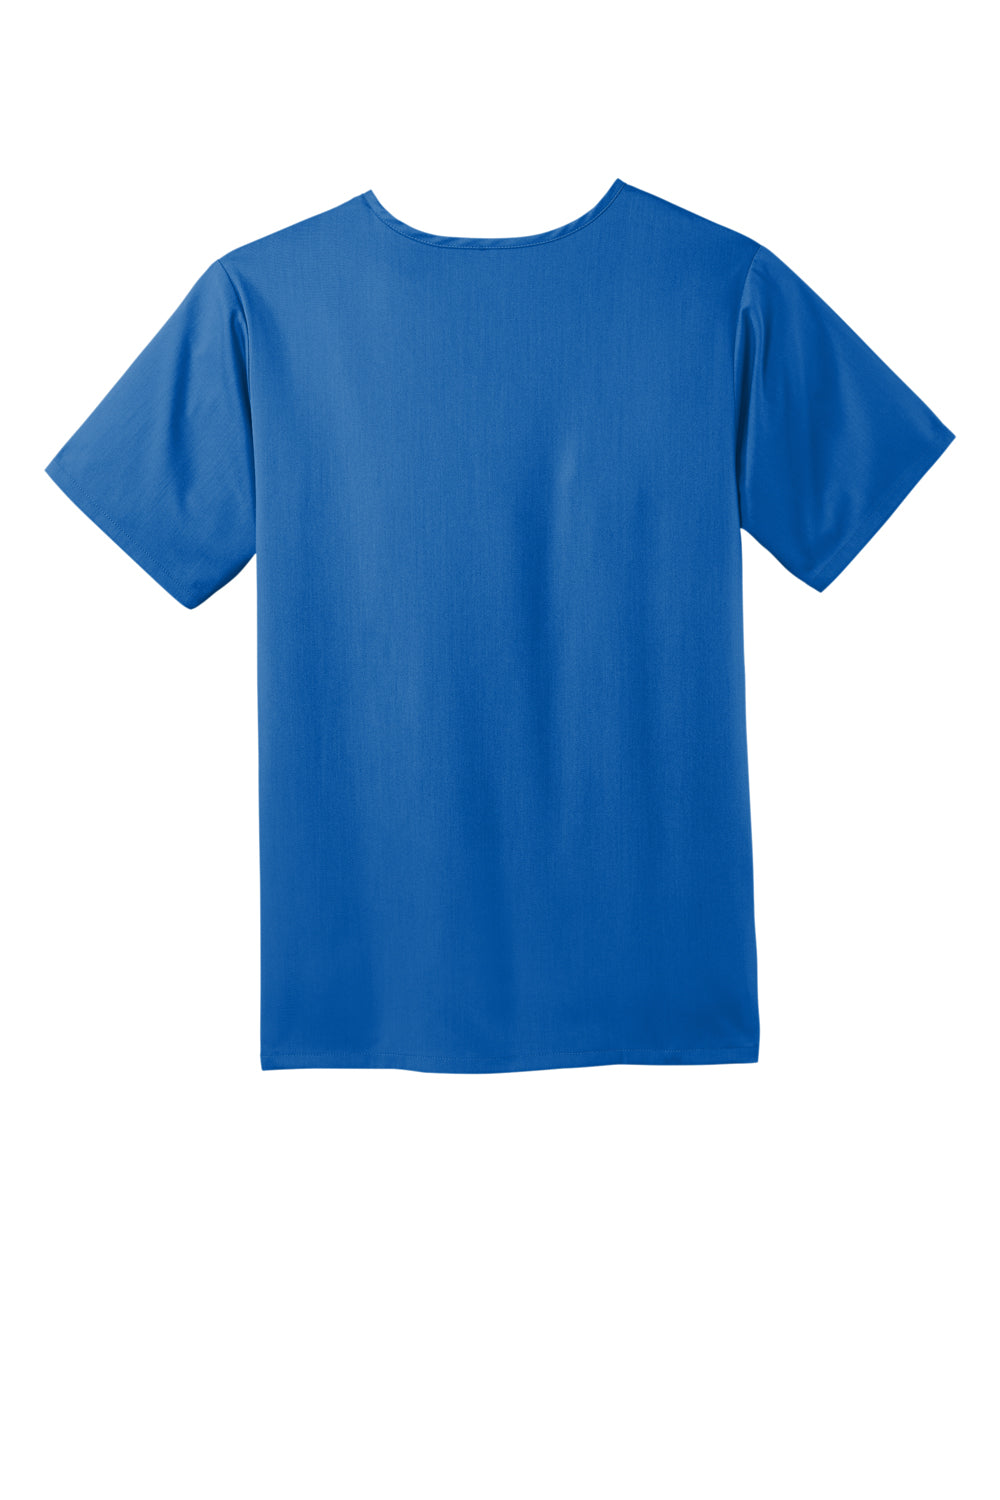 Wonderwink WW5068 Premiere Flex Short Sleeve V-Neck Shirt Royal Blue Flat Back